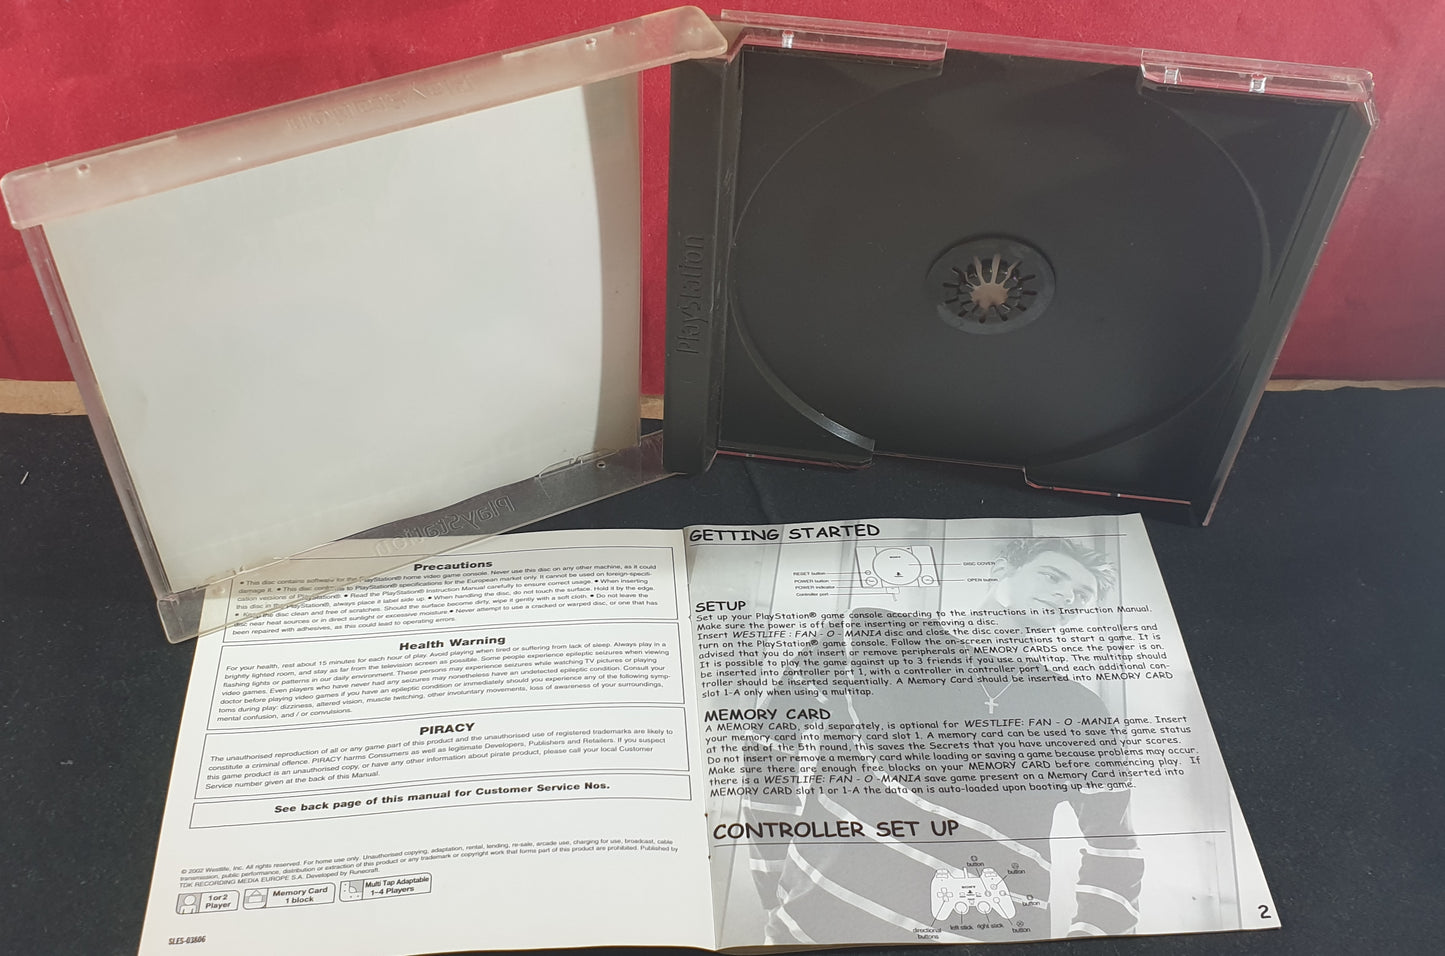 Westlife Fan - O - Mania Sony Playstation 1 (PS1) Game